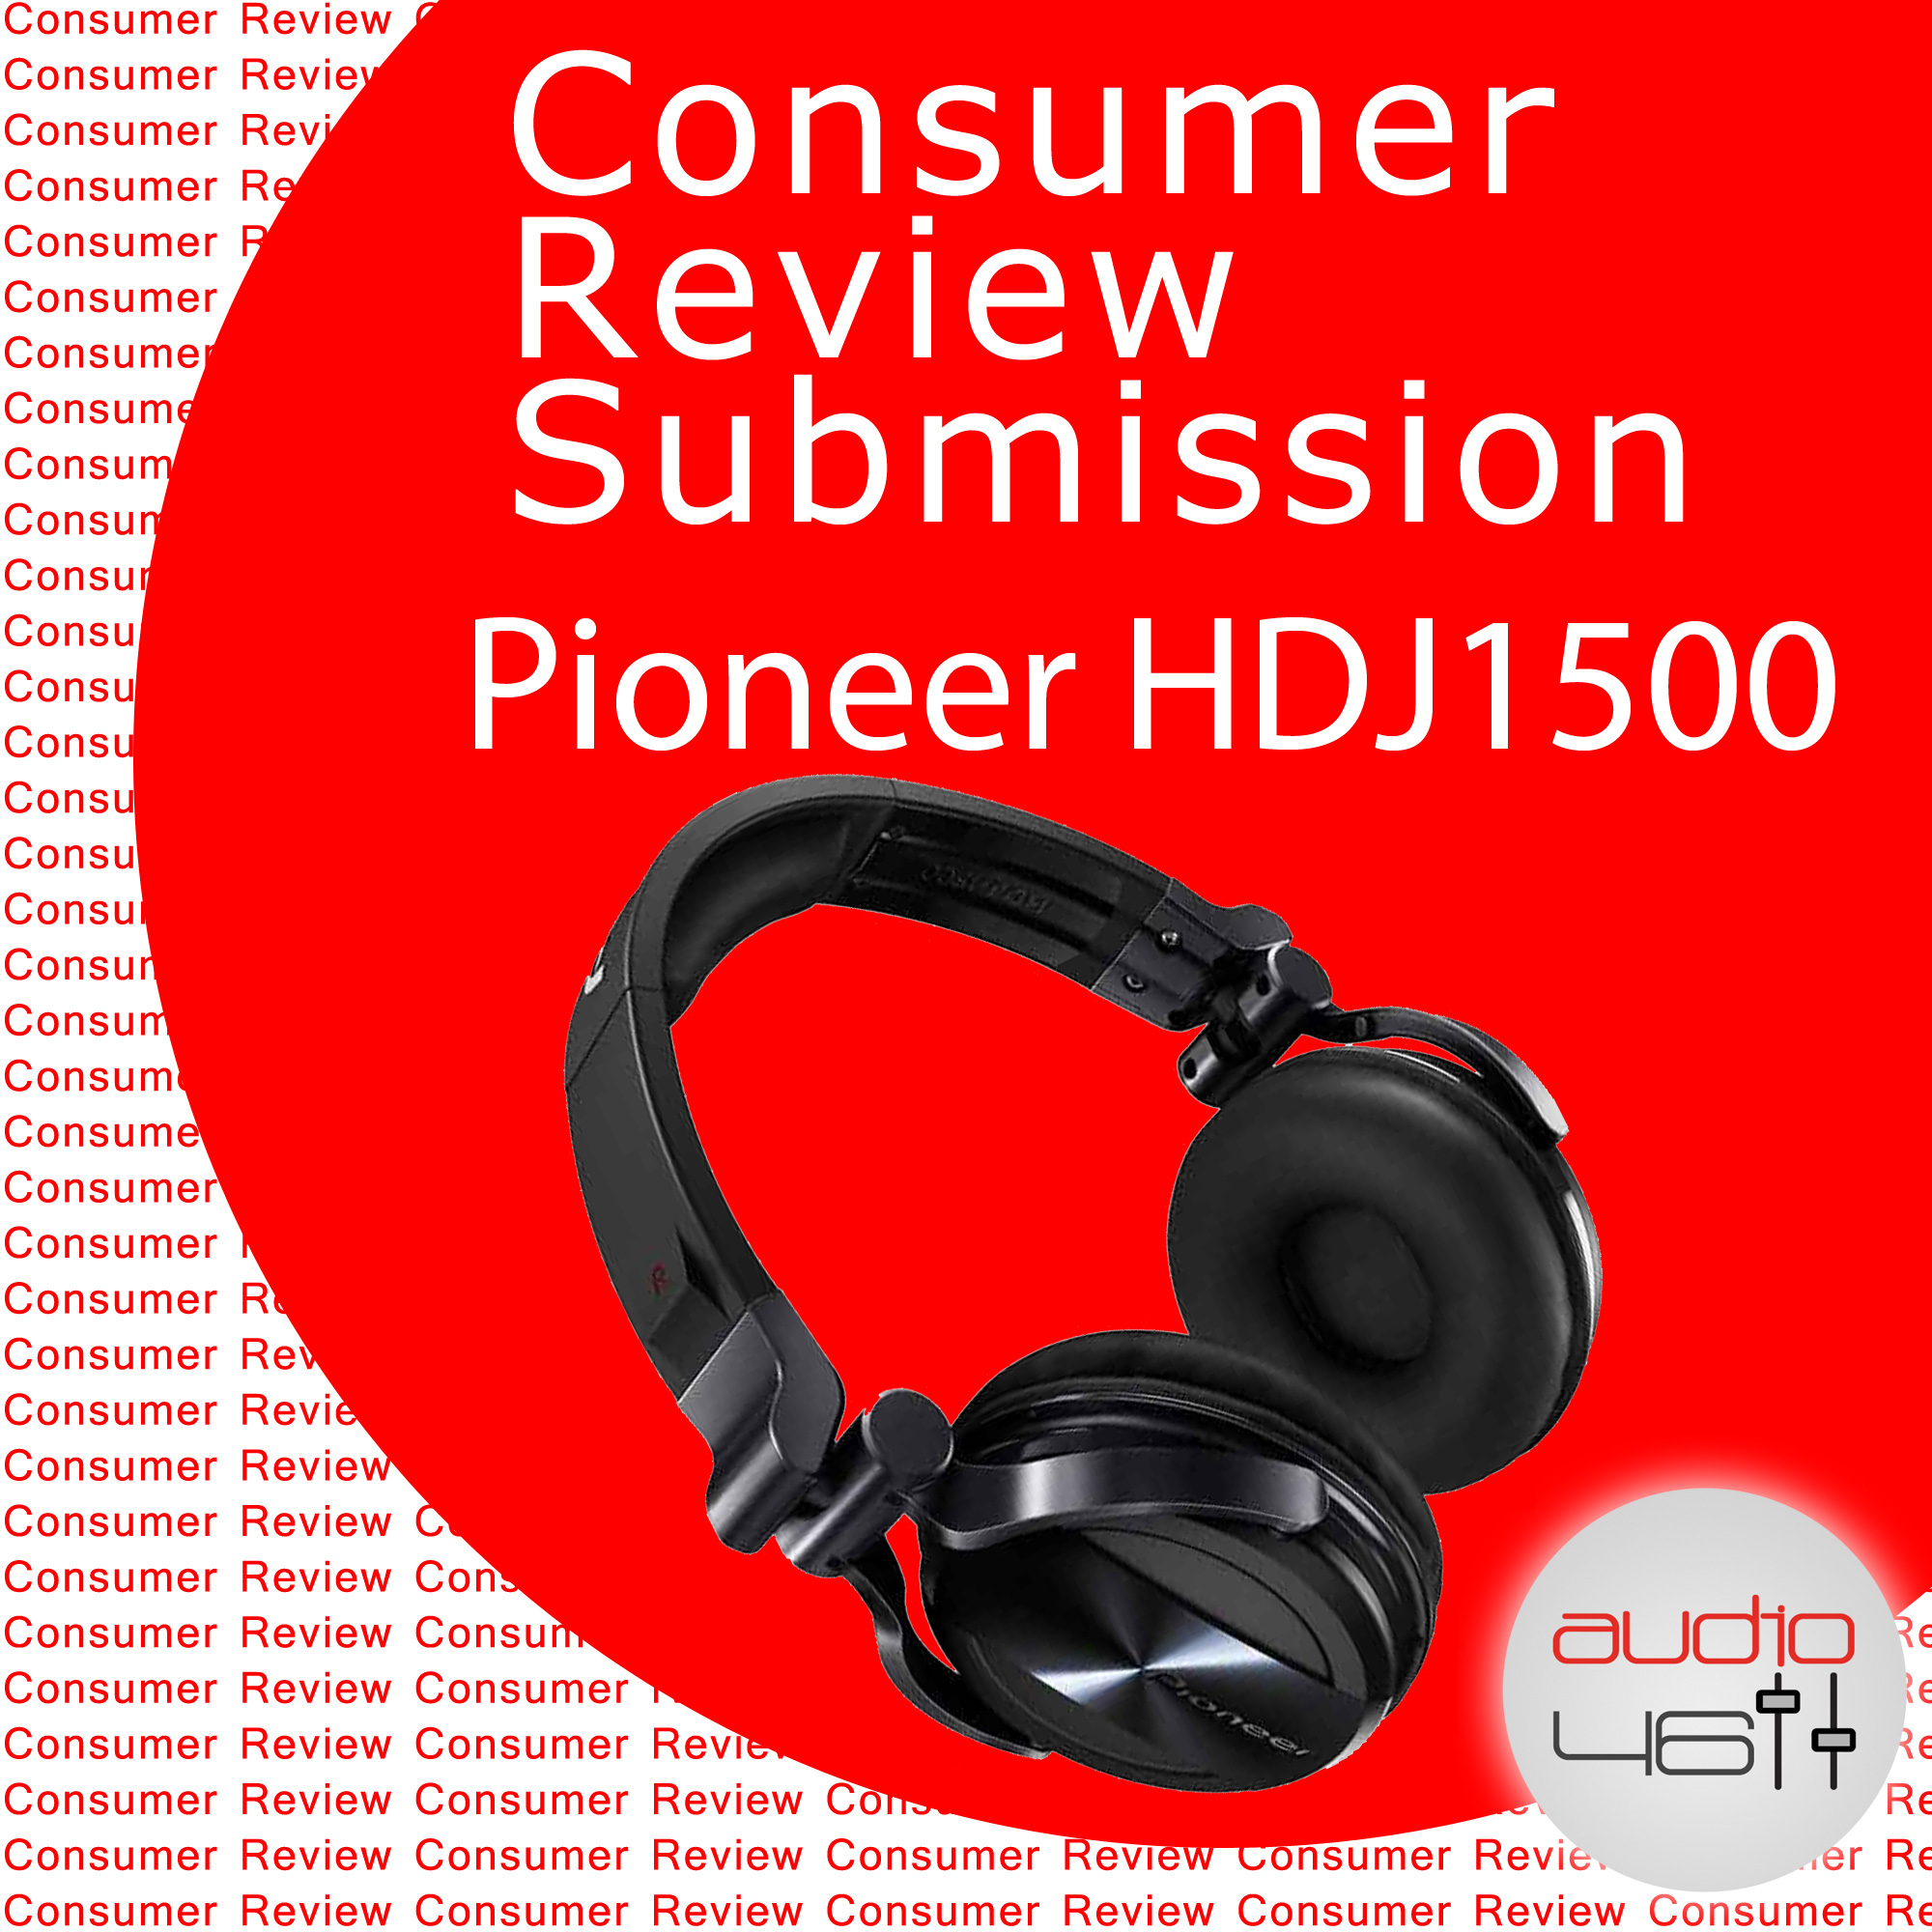 Consumer Review – Pioneer HDJ 1500